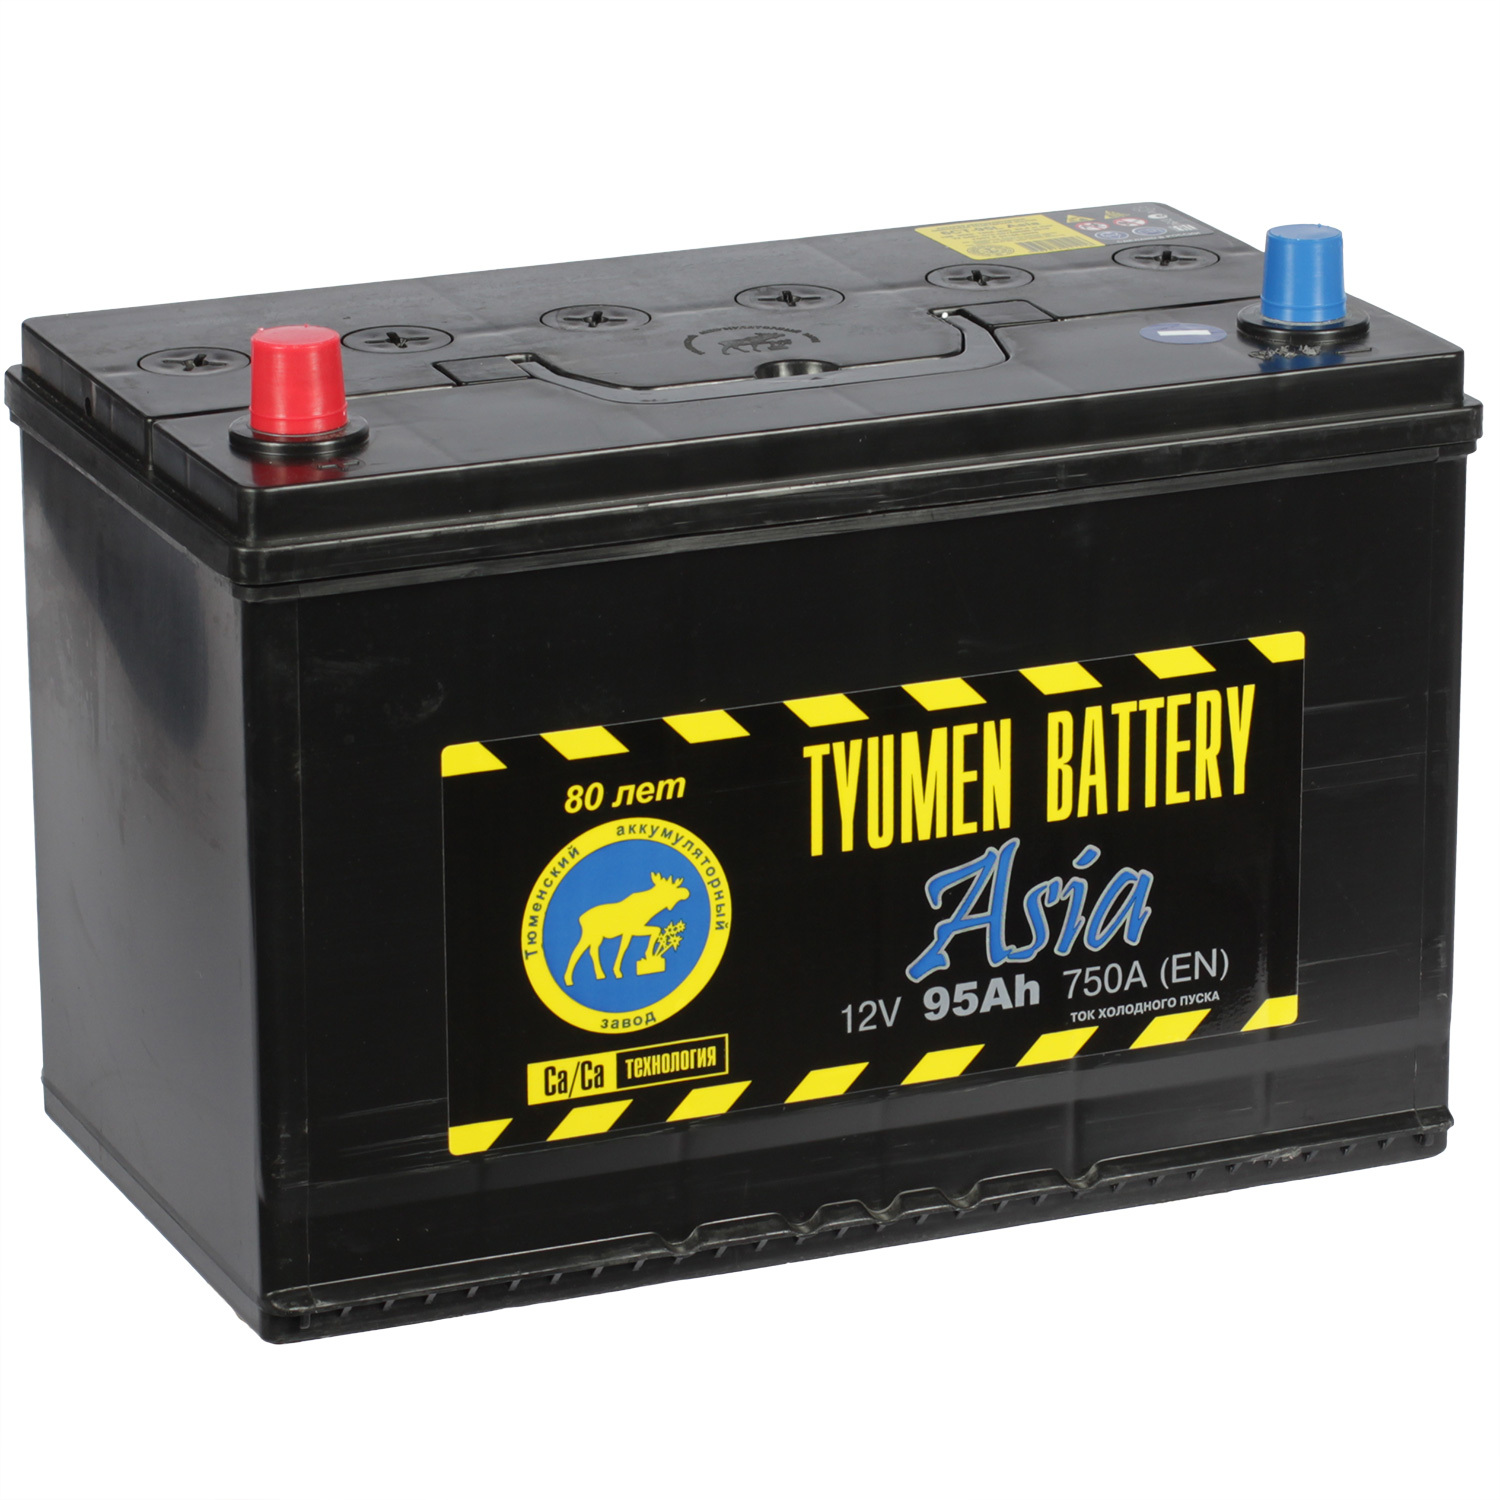 Tyumen Battery Автомобильный аккумулятор Tyumen Battery 95 Ач прямая полярность D31R tyumen battery автомобильный аккумулятор tyumen battery standard 55 ач прямая полярность l2